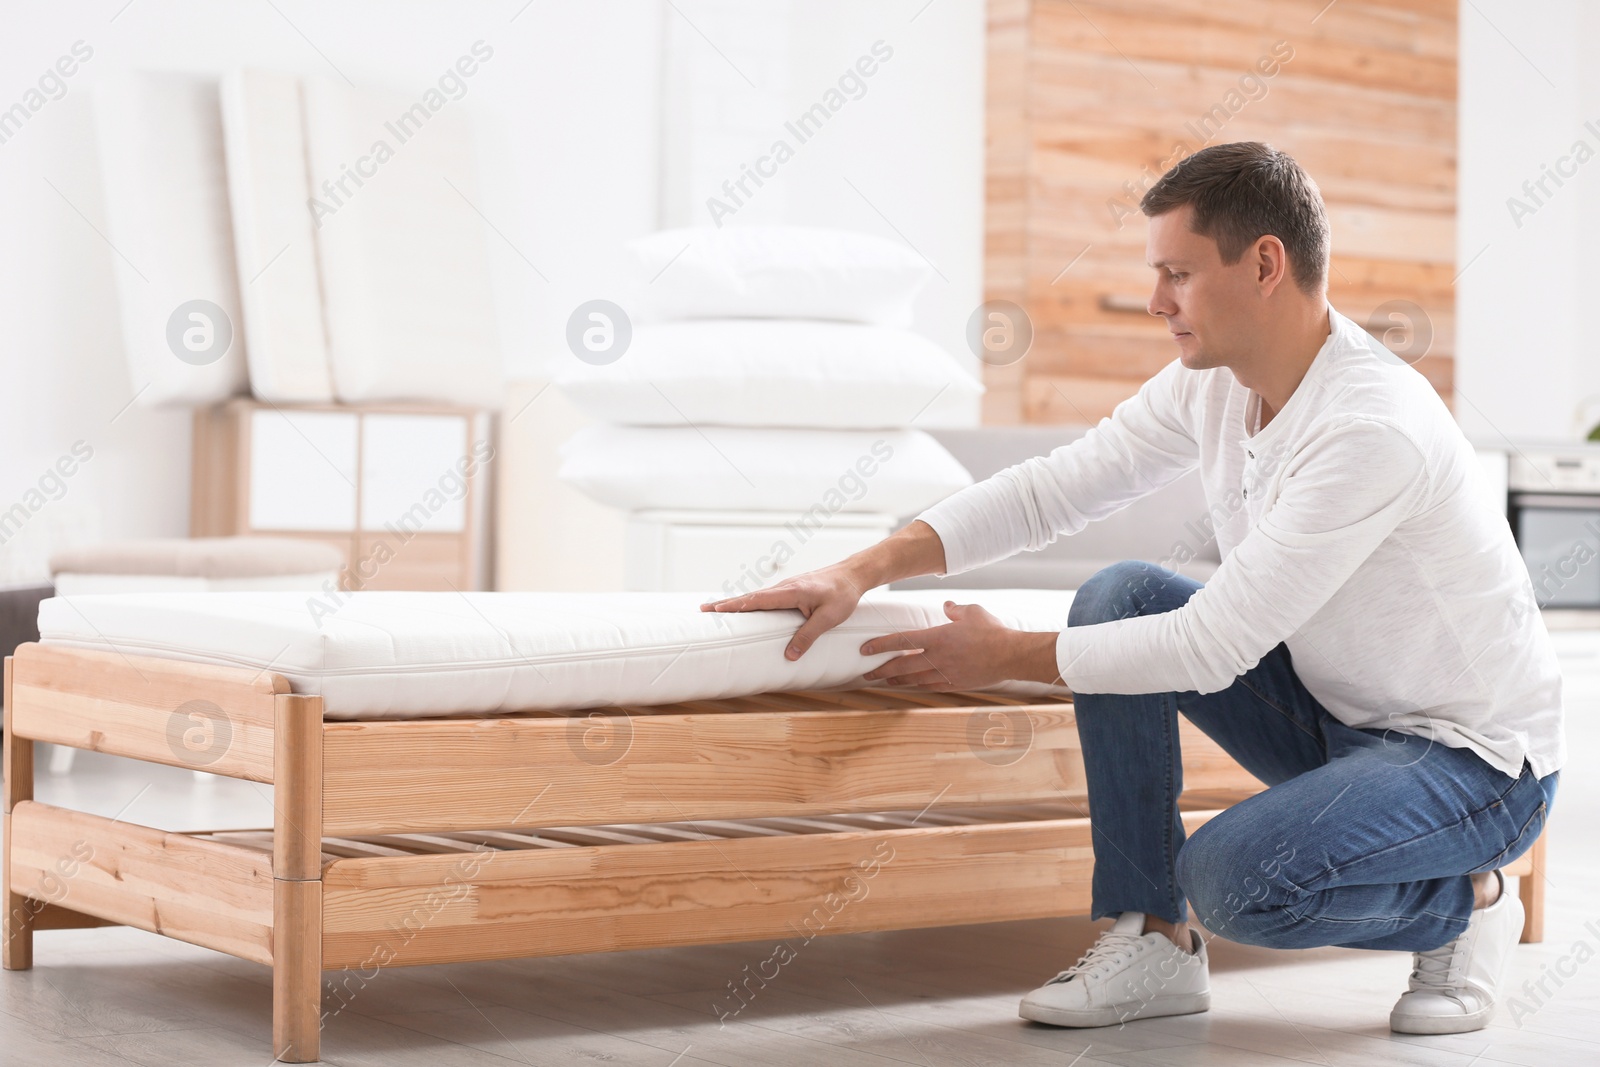 Photo of Man touching soft mattress in furniture store